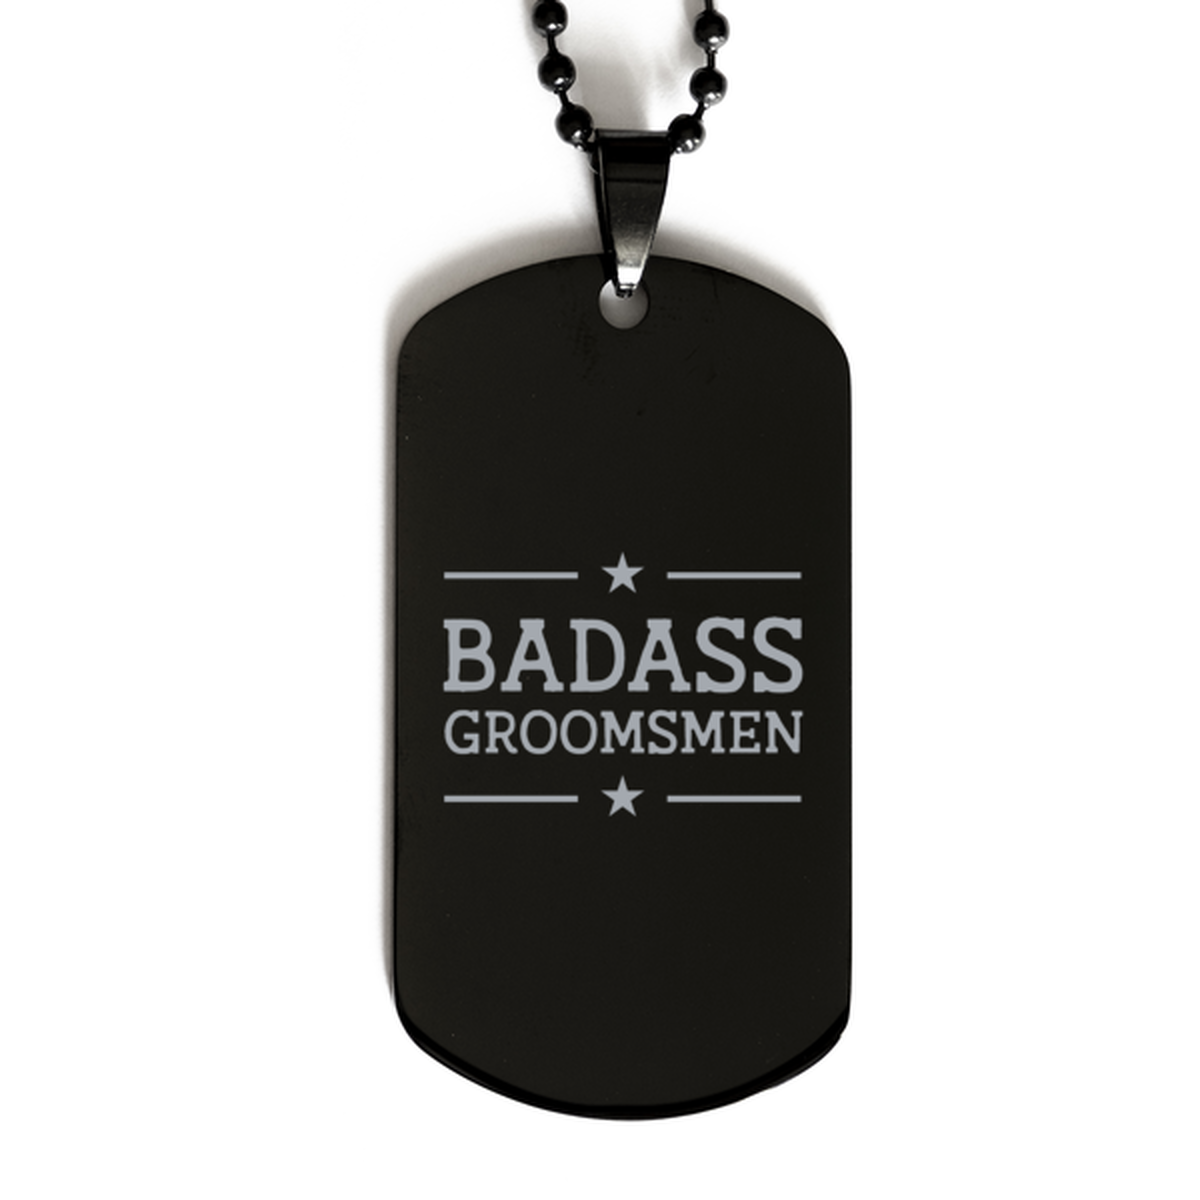 Groomsmen Black Dog Tag, Badass Groomsmen, Funny Family Gifts  Necklace For Groomsmen From Groom